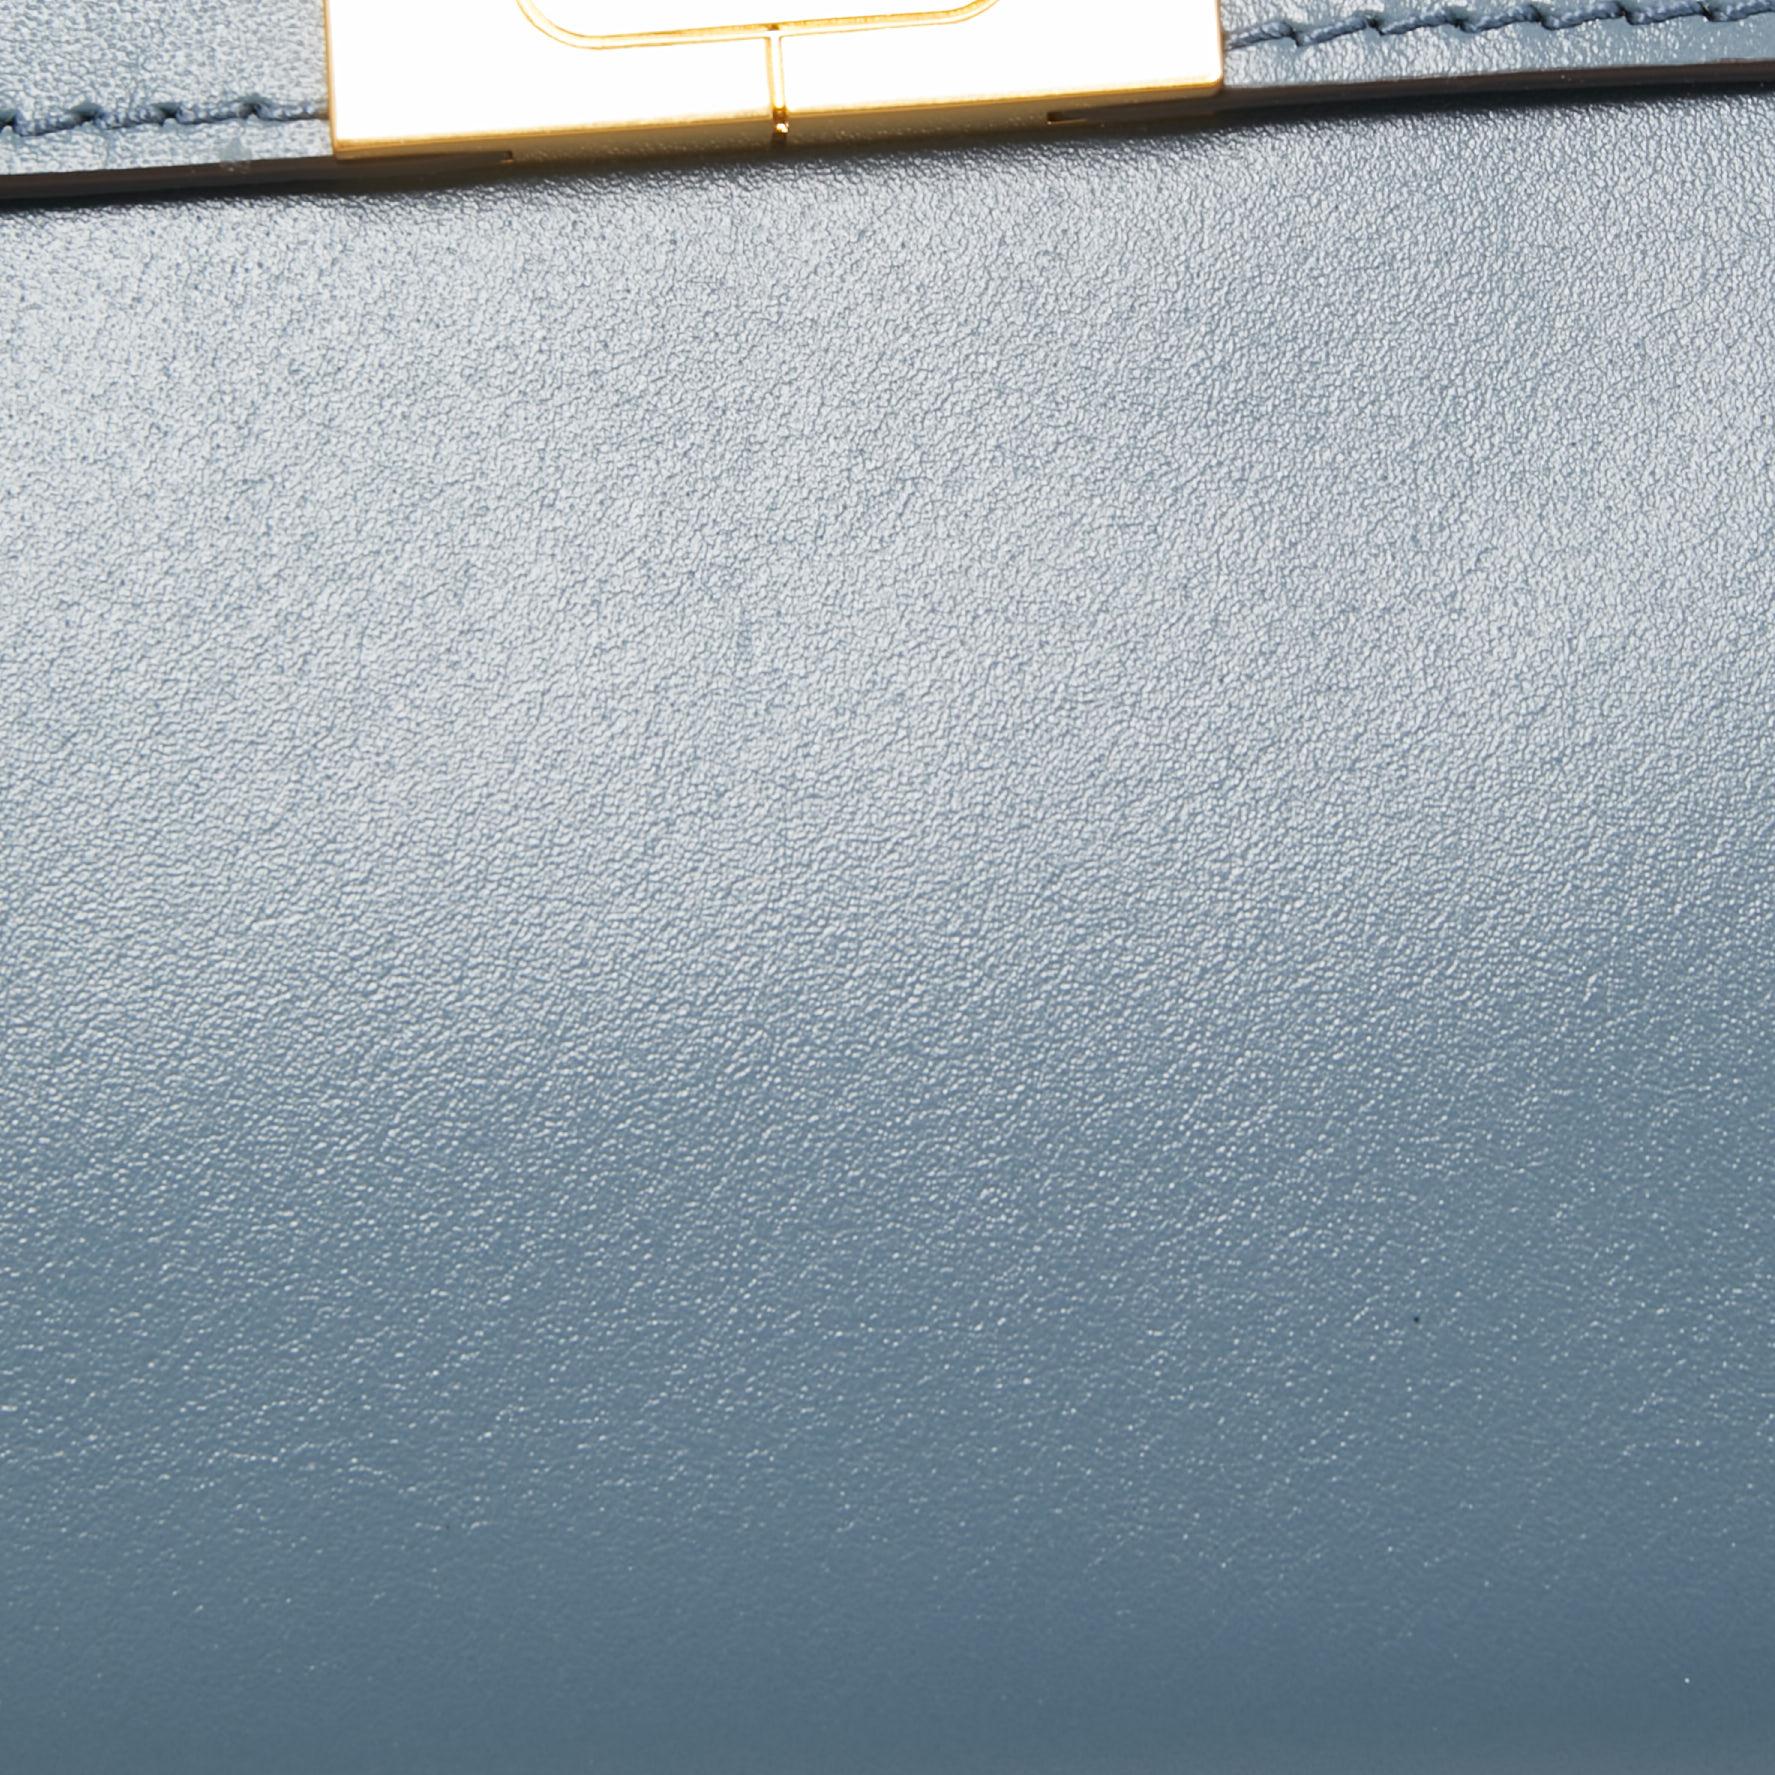 Women's Tory Burch Light Blue Leather Mini Lee Radziwill Wallet